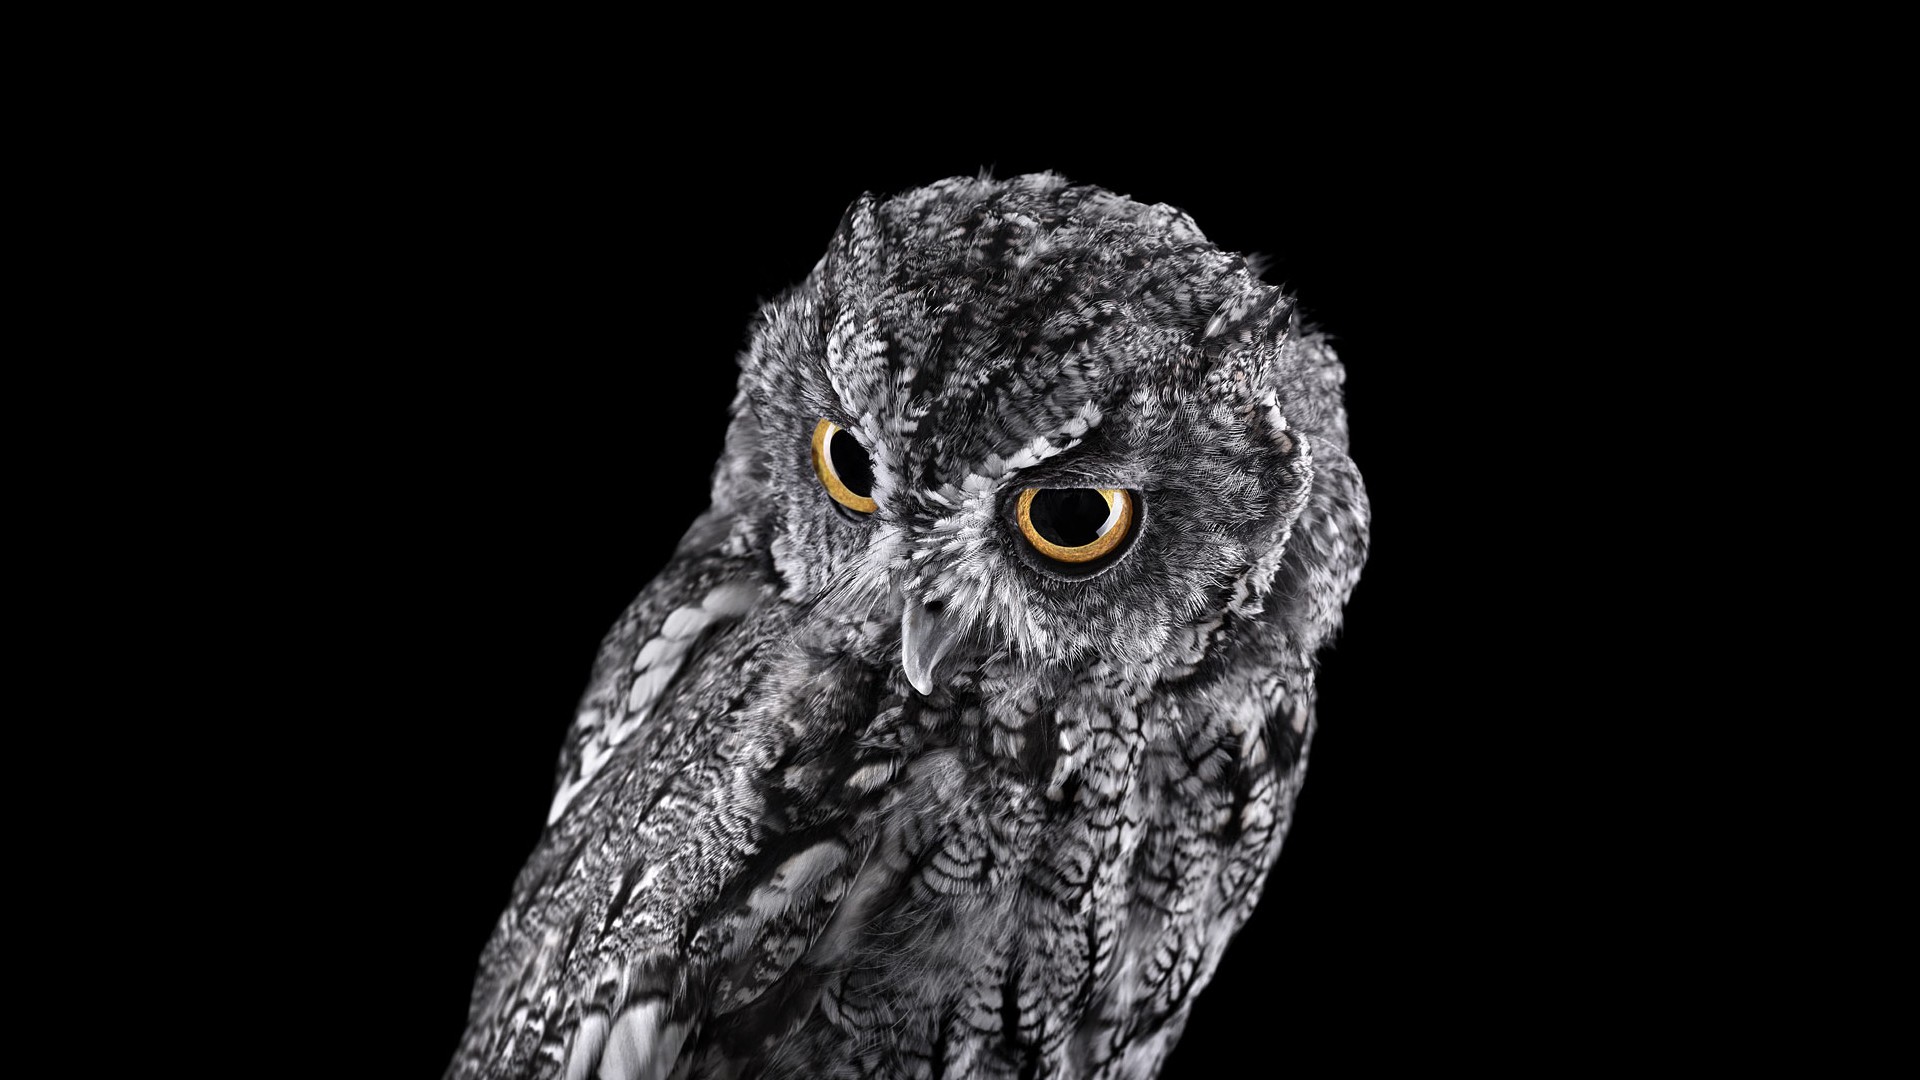 General 1920x1080 photography animals birds owl simple background black background animal eyes